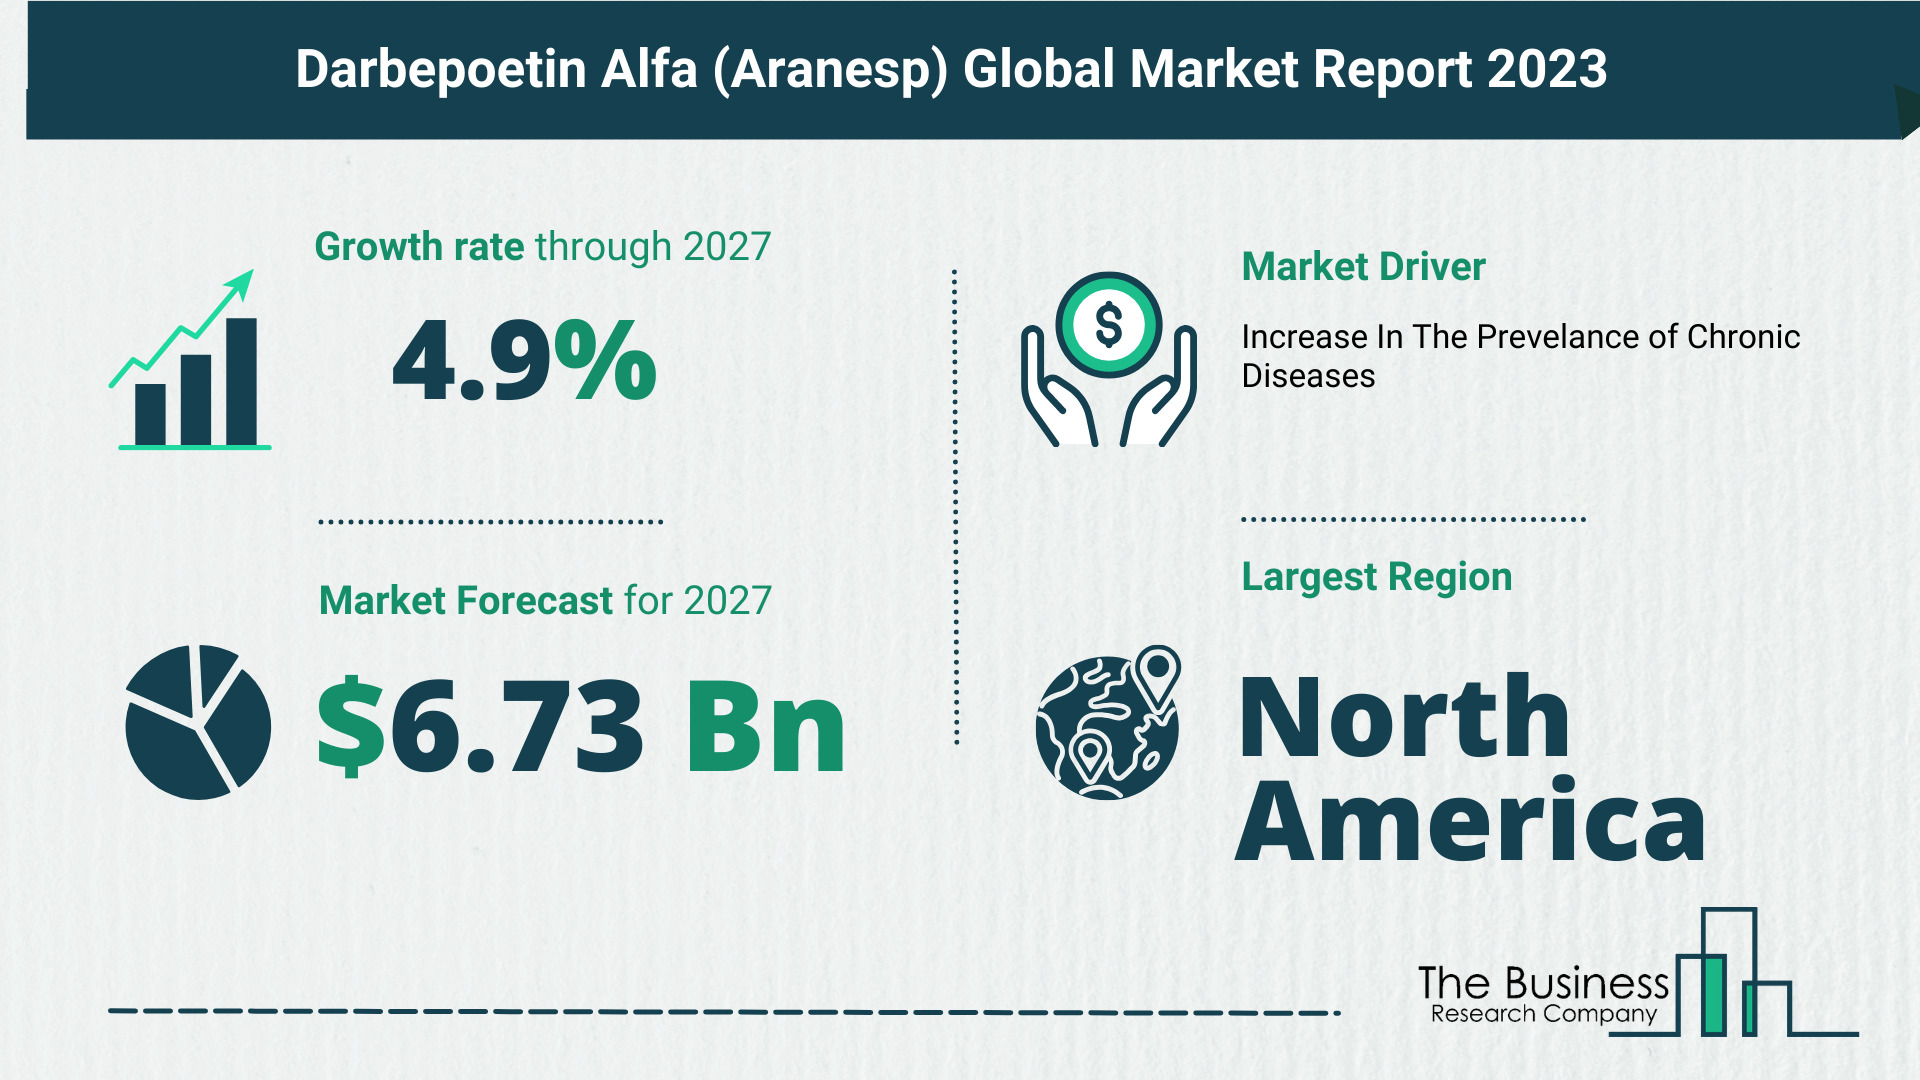 How Is The Darbepoetin Alfa (Aranesp) Market Expected To Grow Through 2023-2032